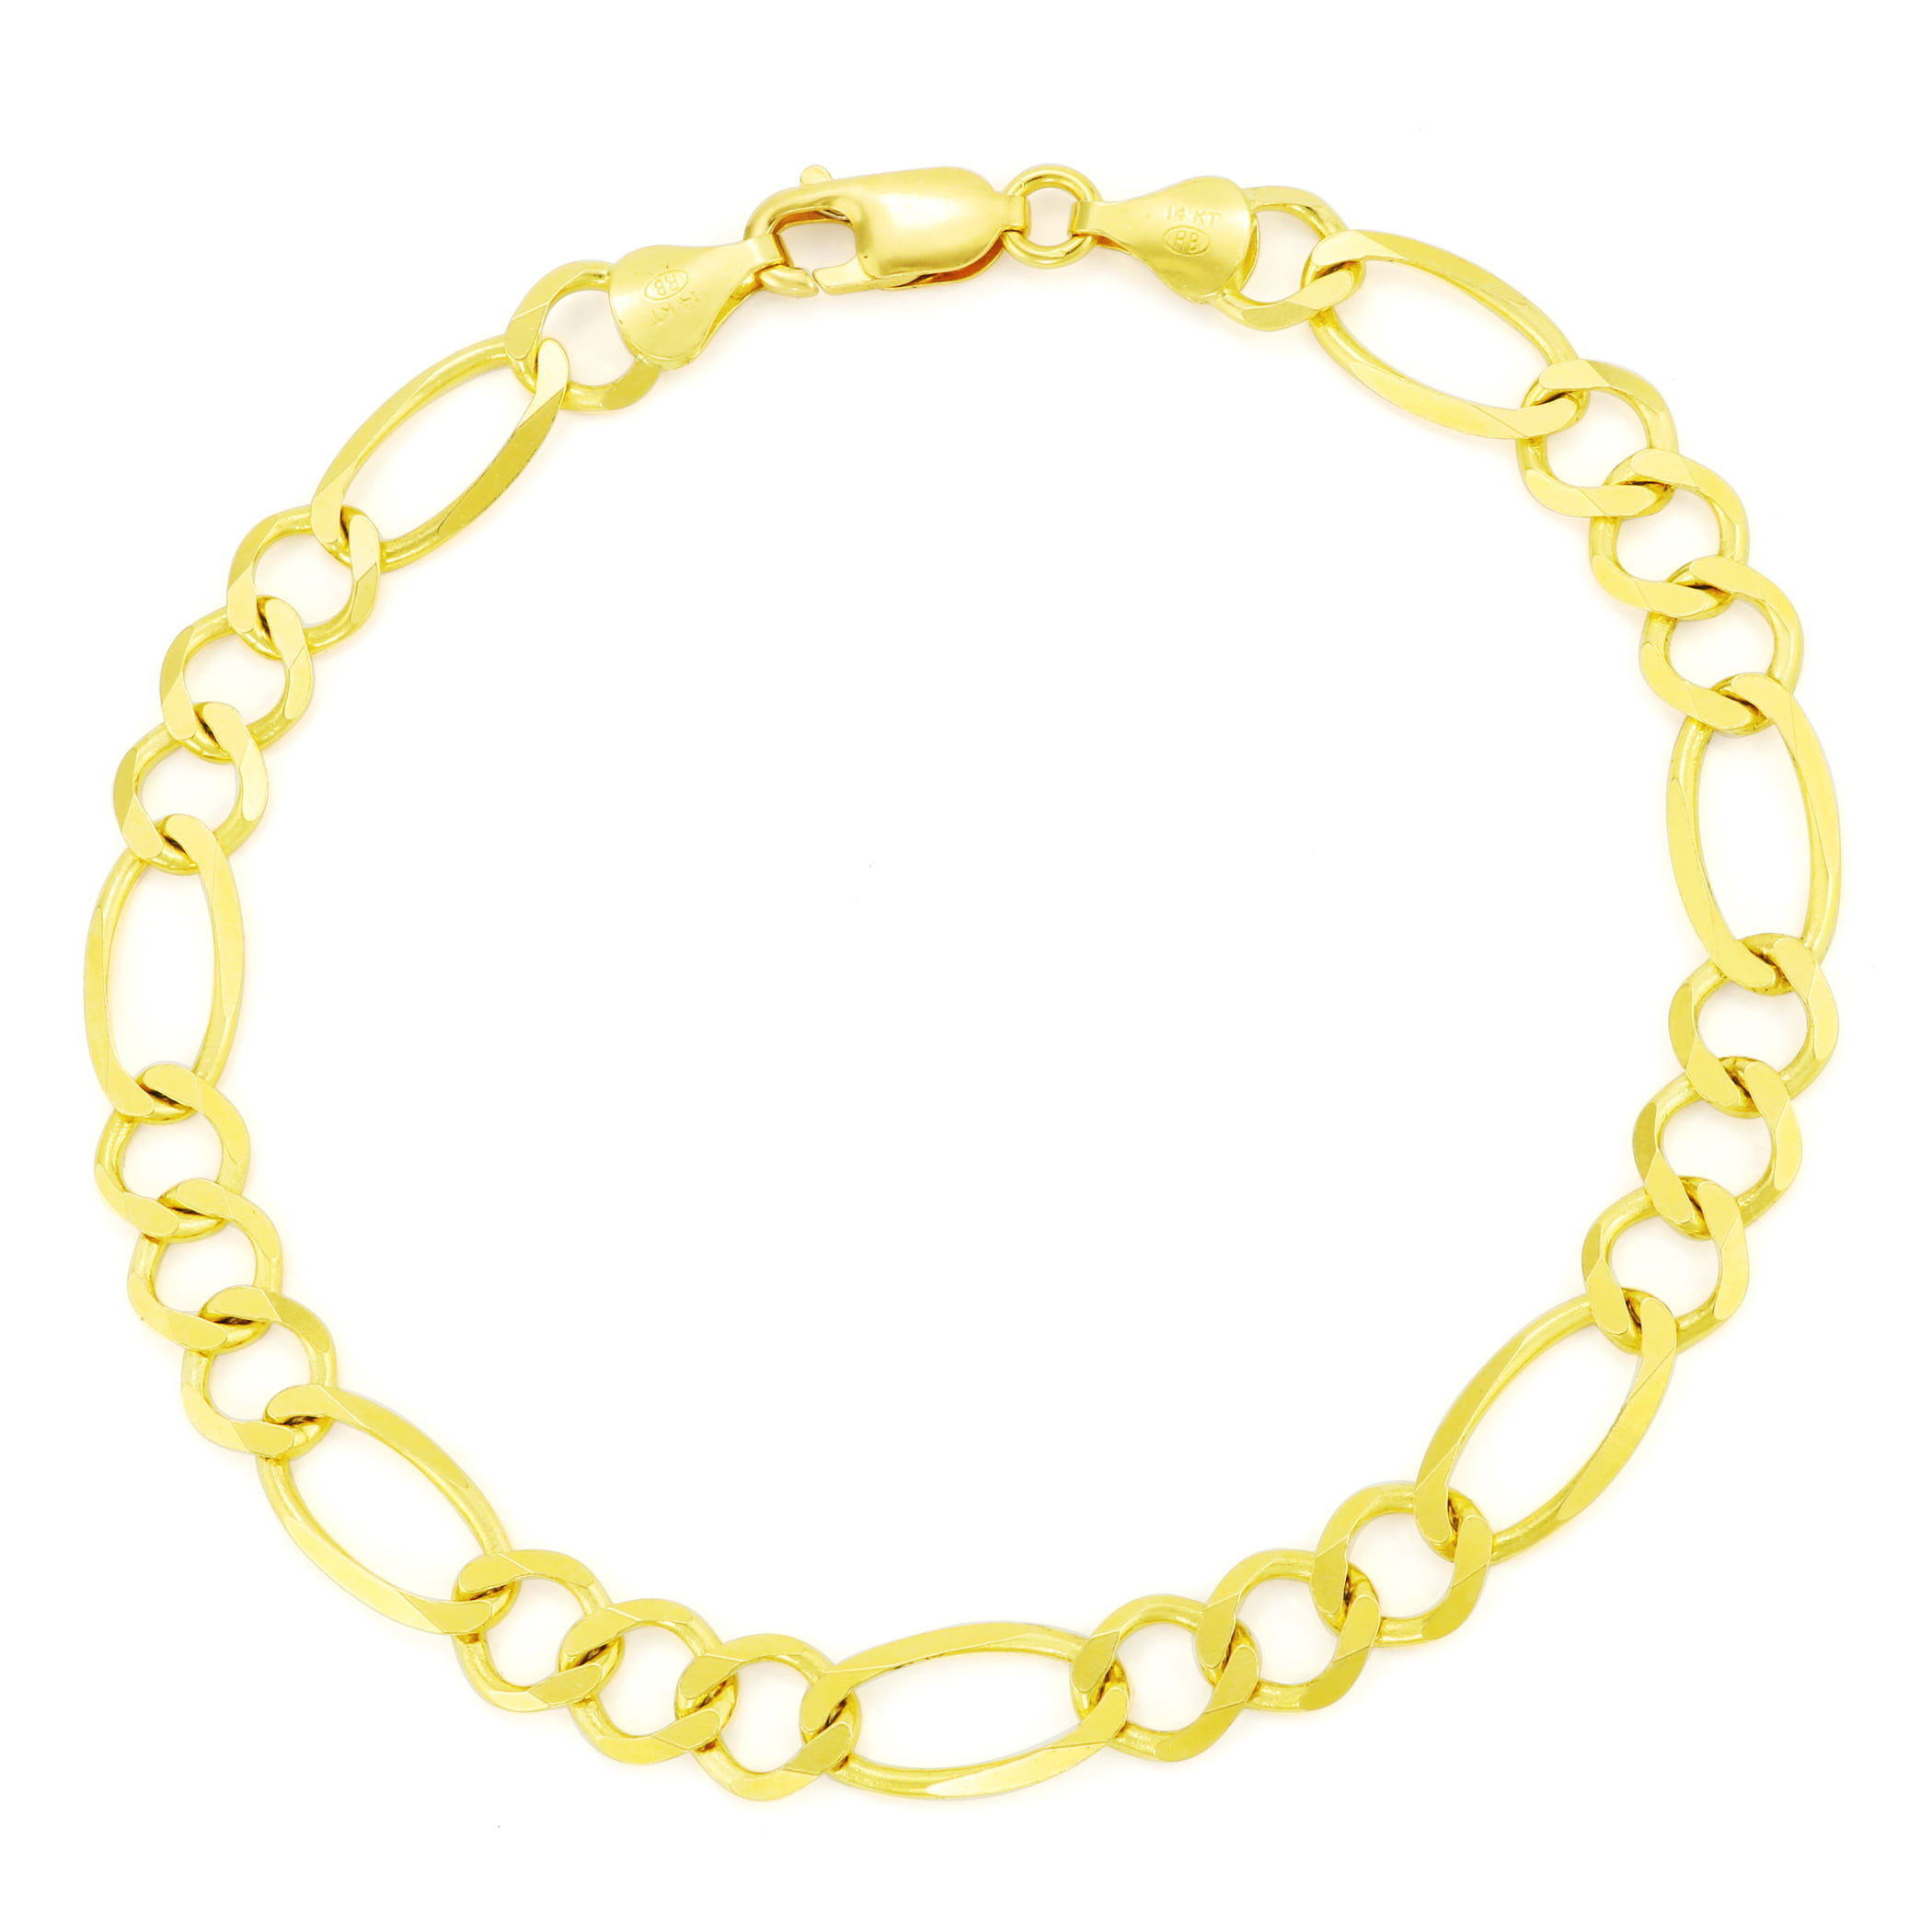 Nuragold - 14k Yellow Gold 7mm Solid Italian Figaro Link Chain Bracelet